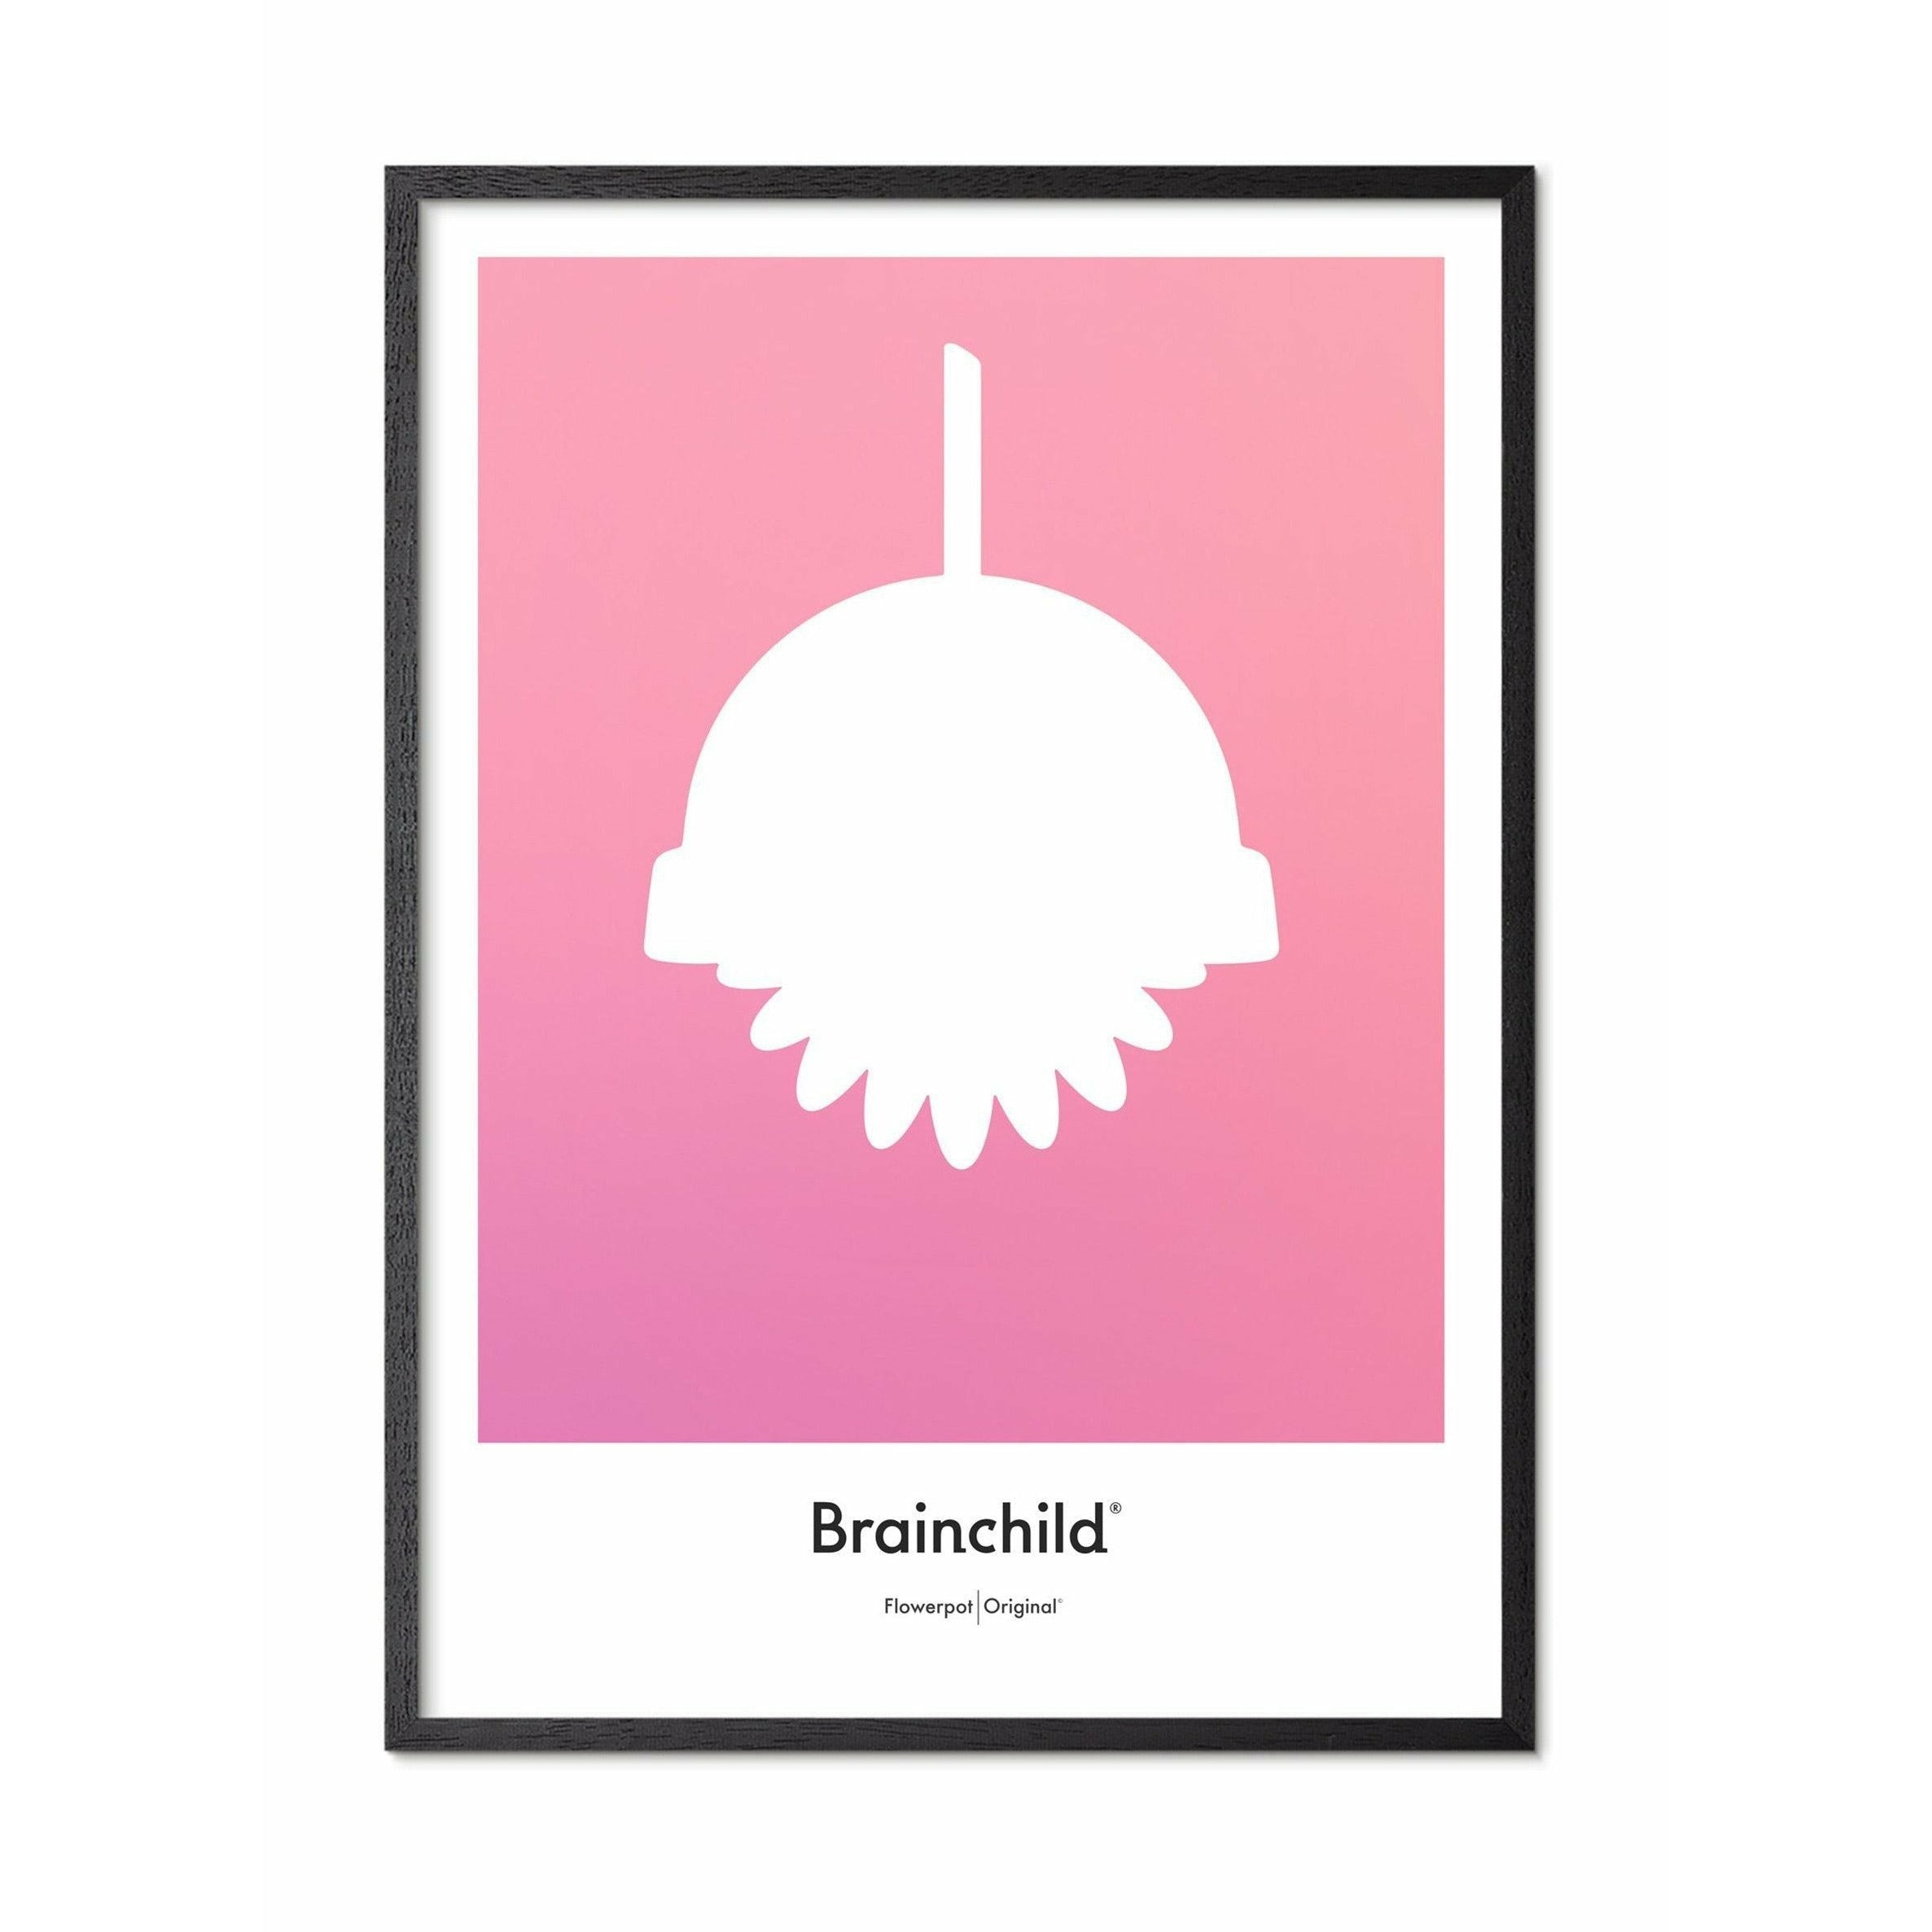 Brainchild Flowerpot Designikon Plakat, Ramme I Sortmalet Træ 70X100 Cm, Rosa